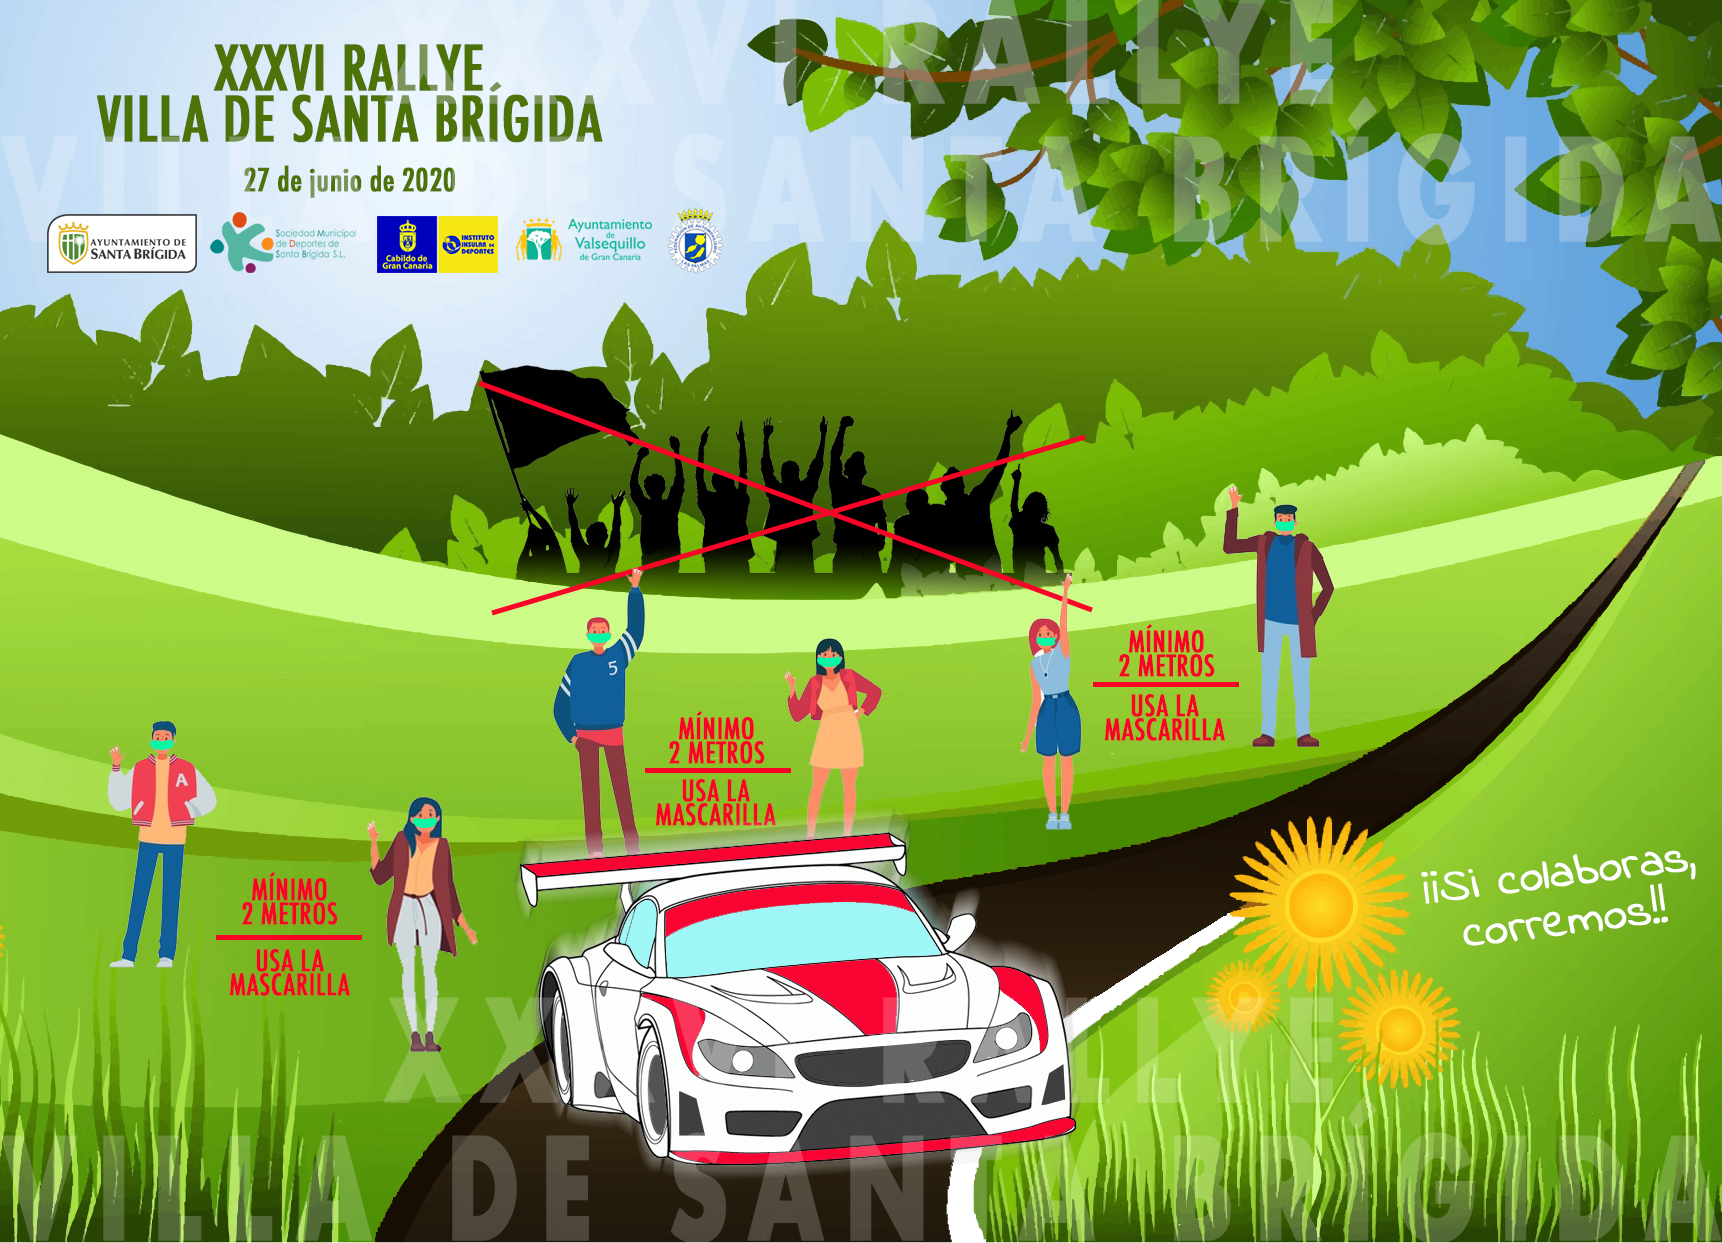 Rallye Villa de Santa Brígida 2020